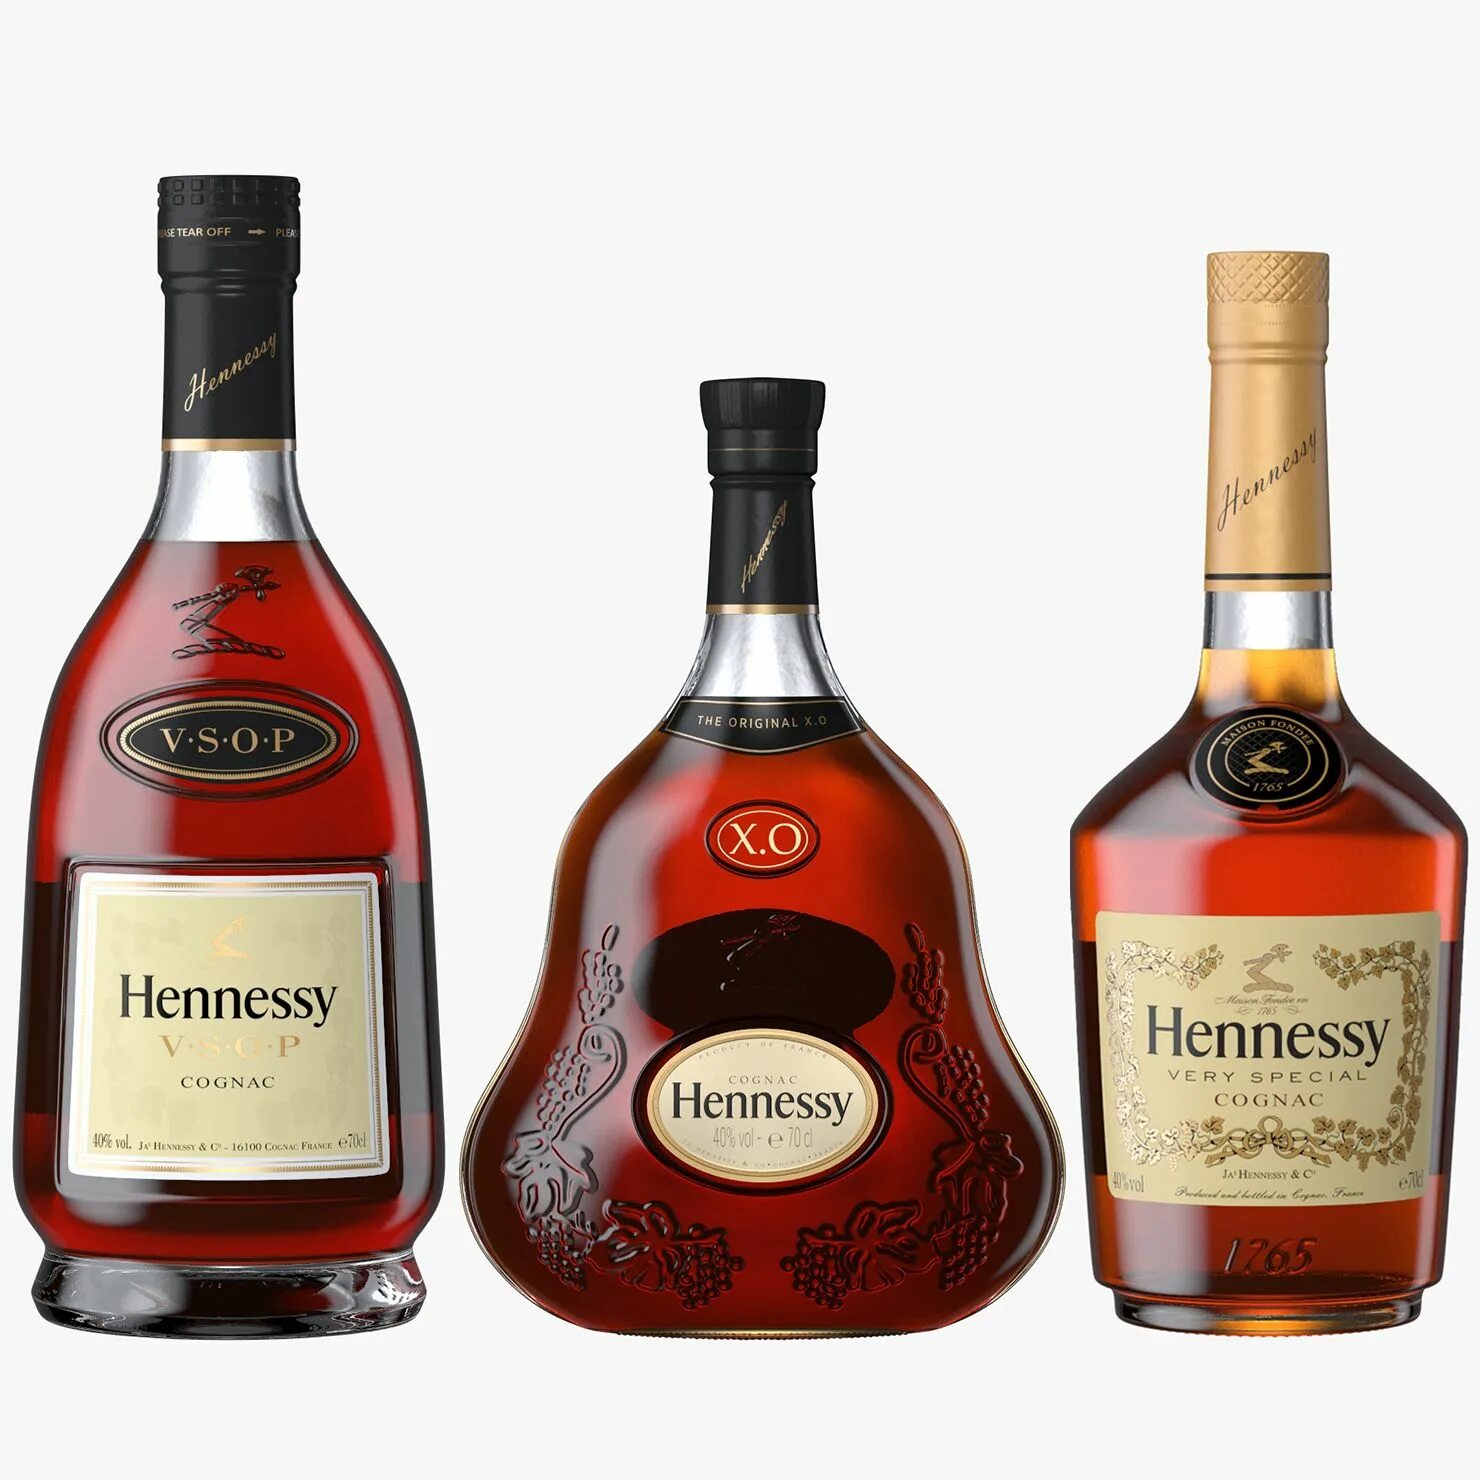 Какой коньяк хороший цены. Hennessy XO vs VSOP. Коньяк французский Hennessy vs. Hennessy vs Cognac оригинал. Коньяк vs VSOP XO.